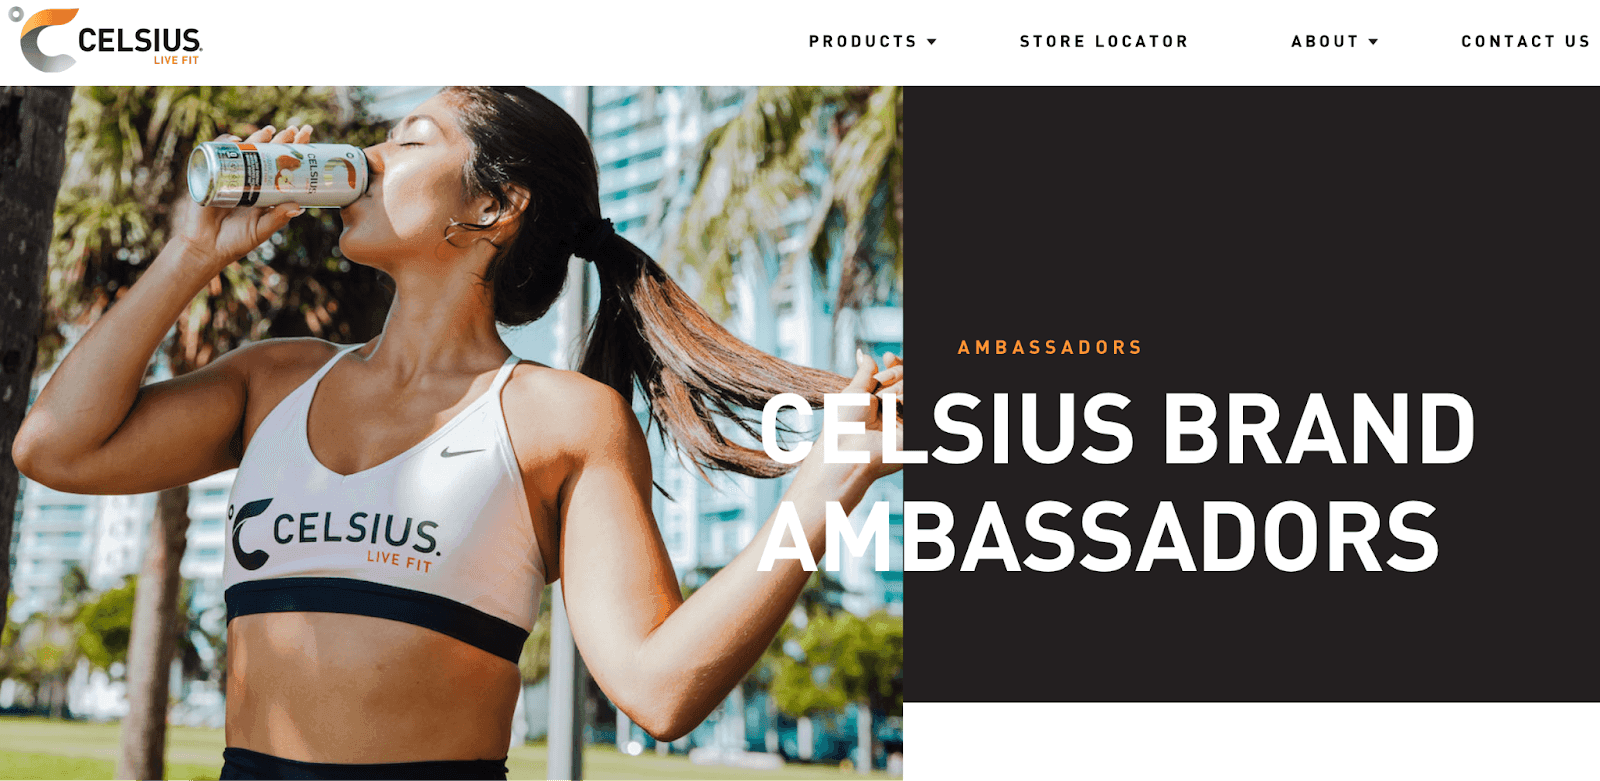 Celsius brand ambassador product marketing strategy